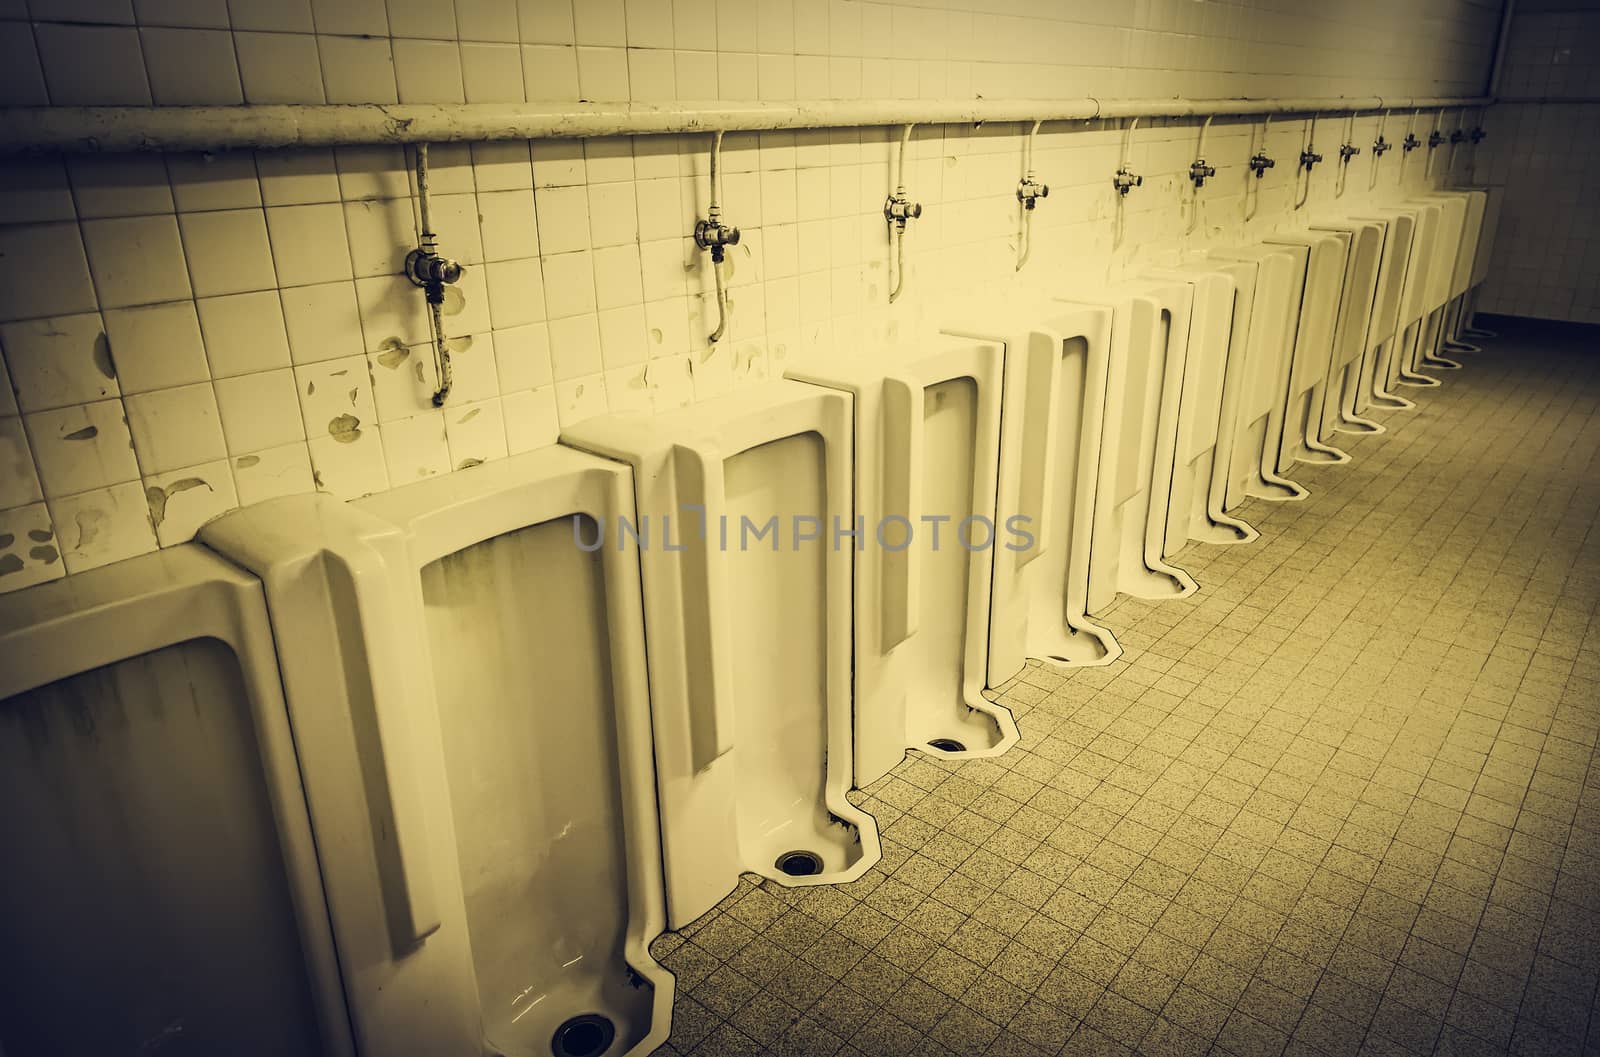 Public toilets for men by esebene